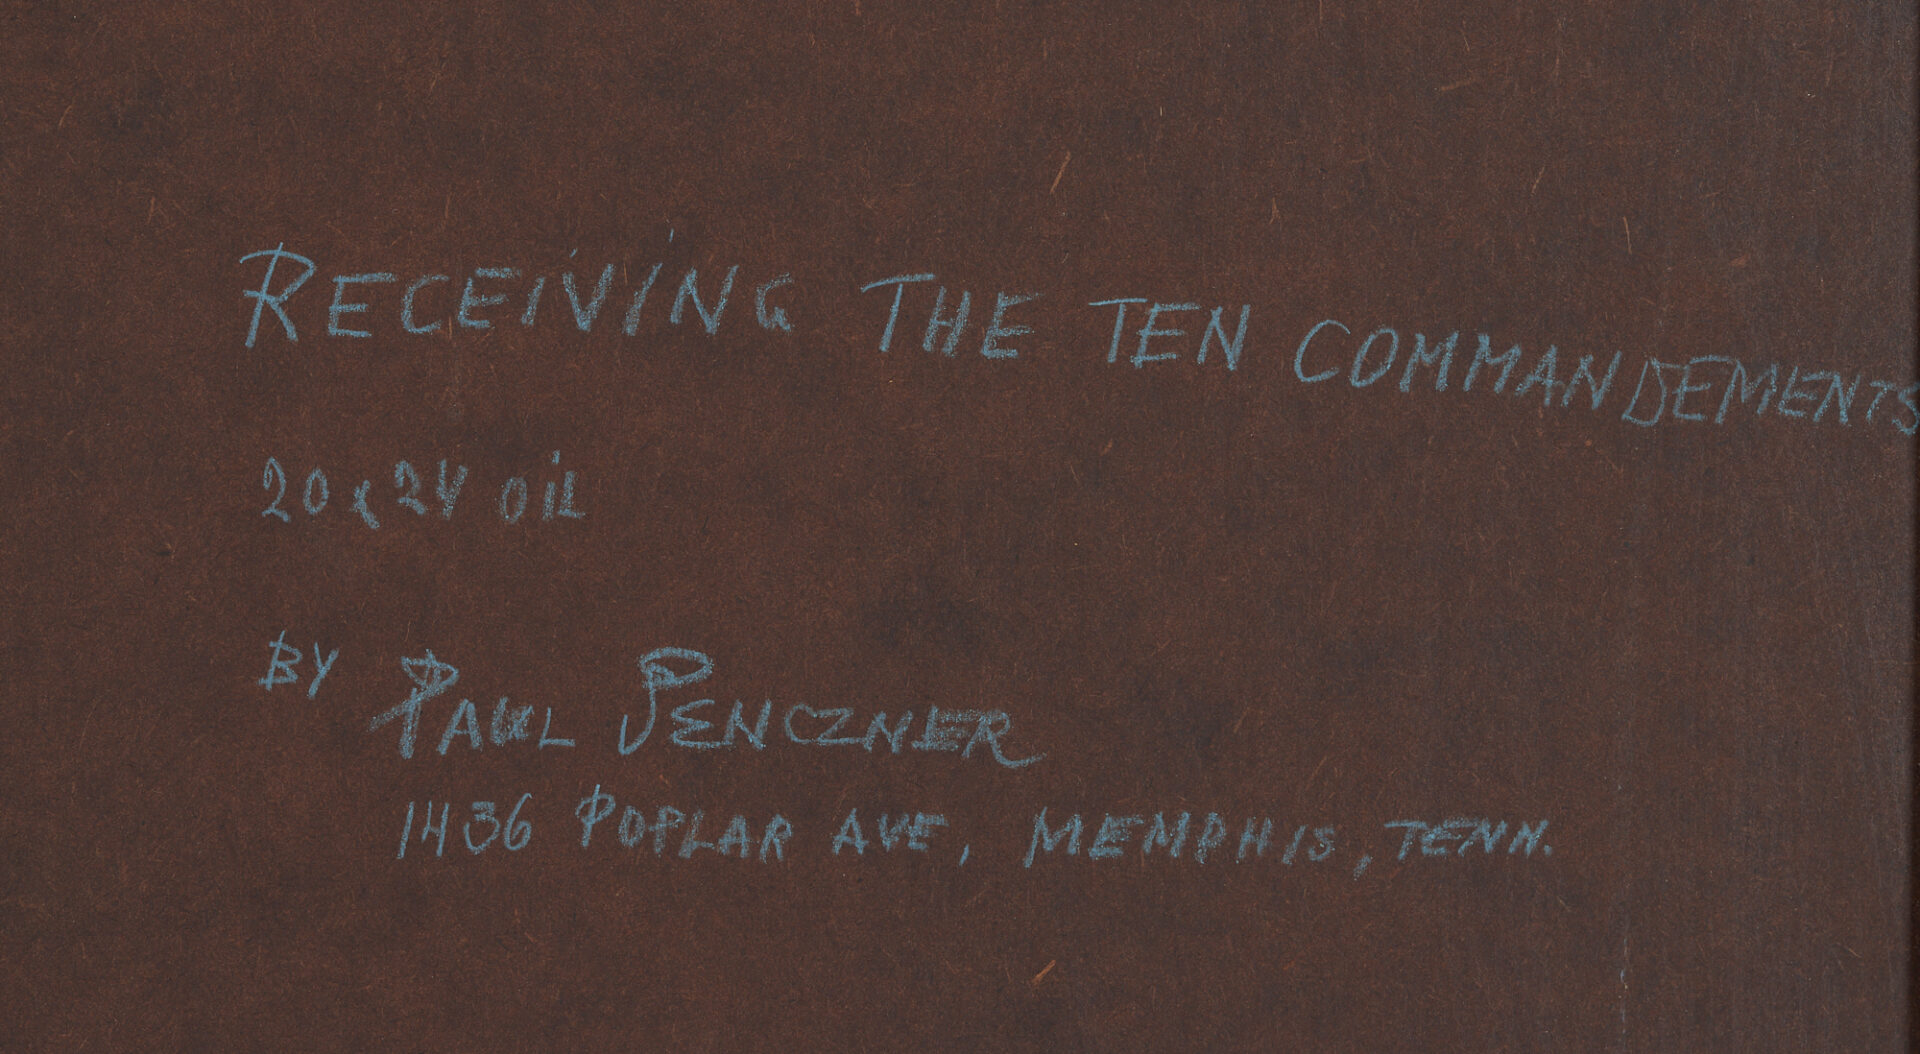 Lot 717: Paul Penczner Oil on Board, Receiving The Ten Commandments